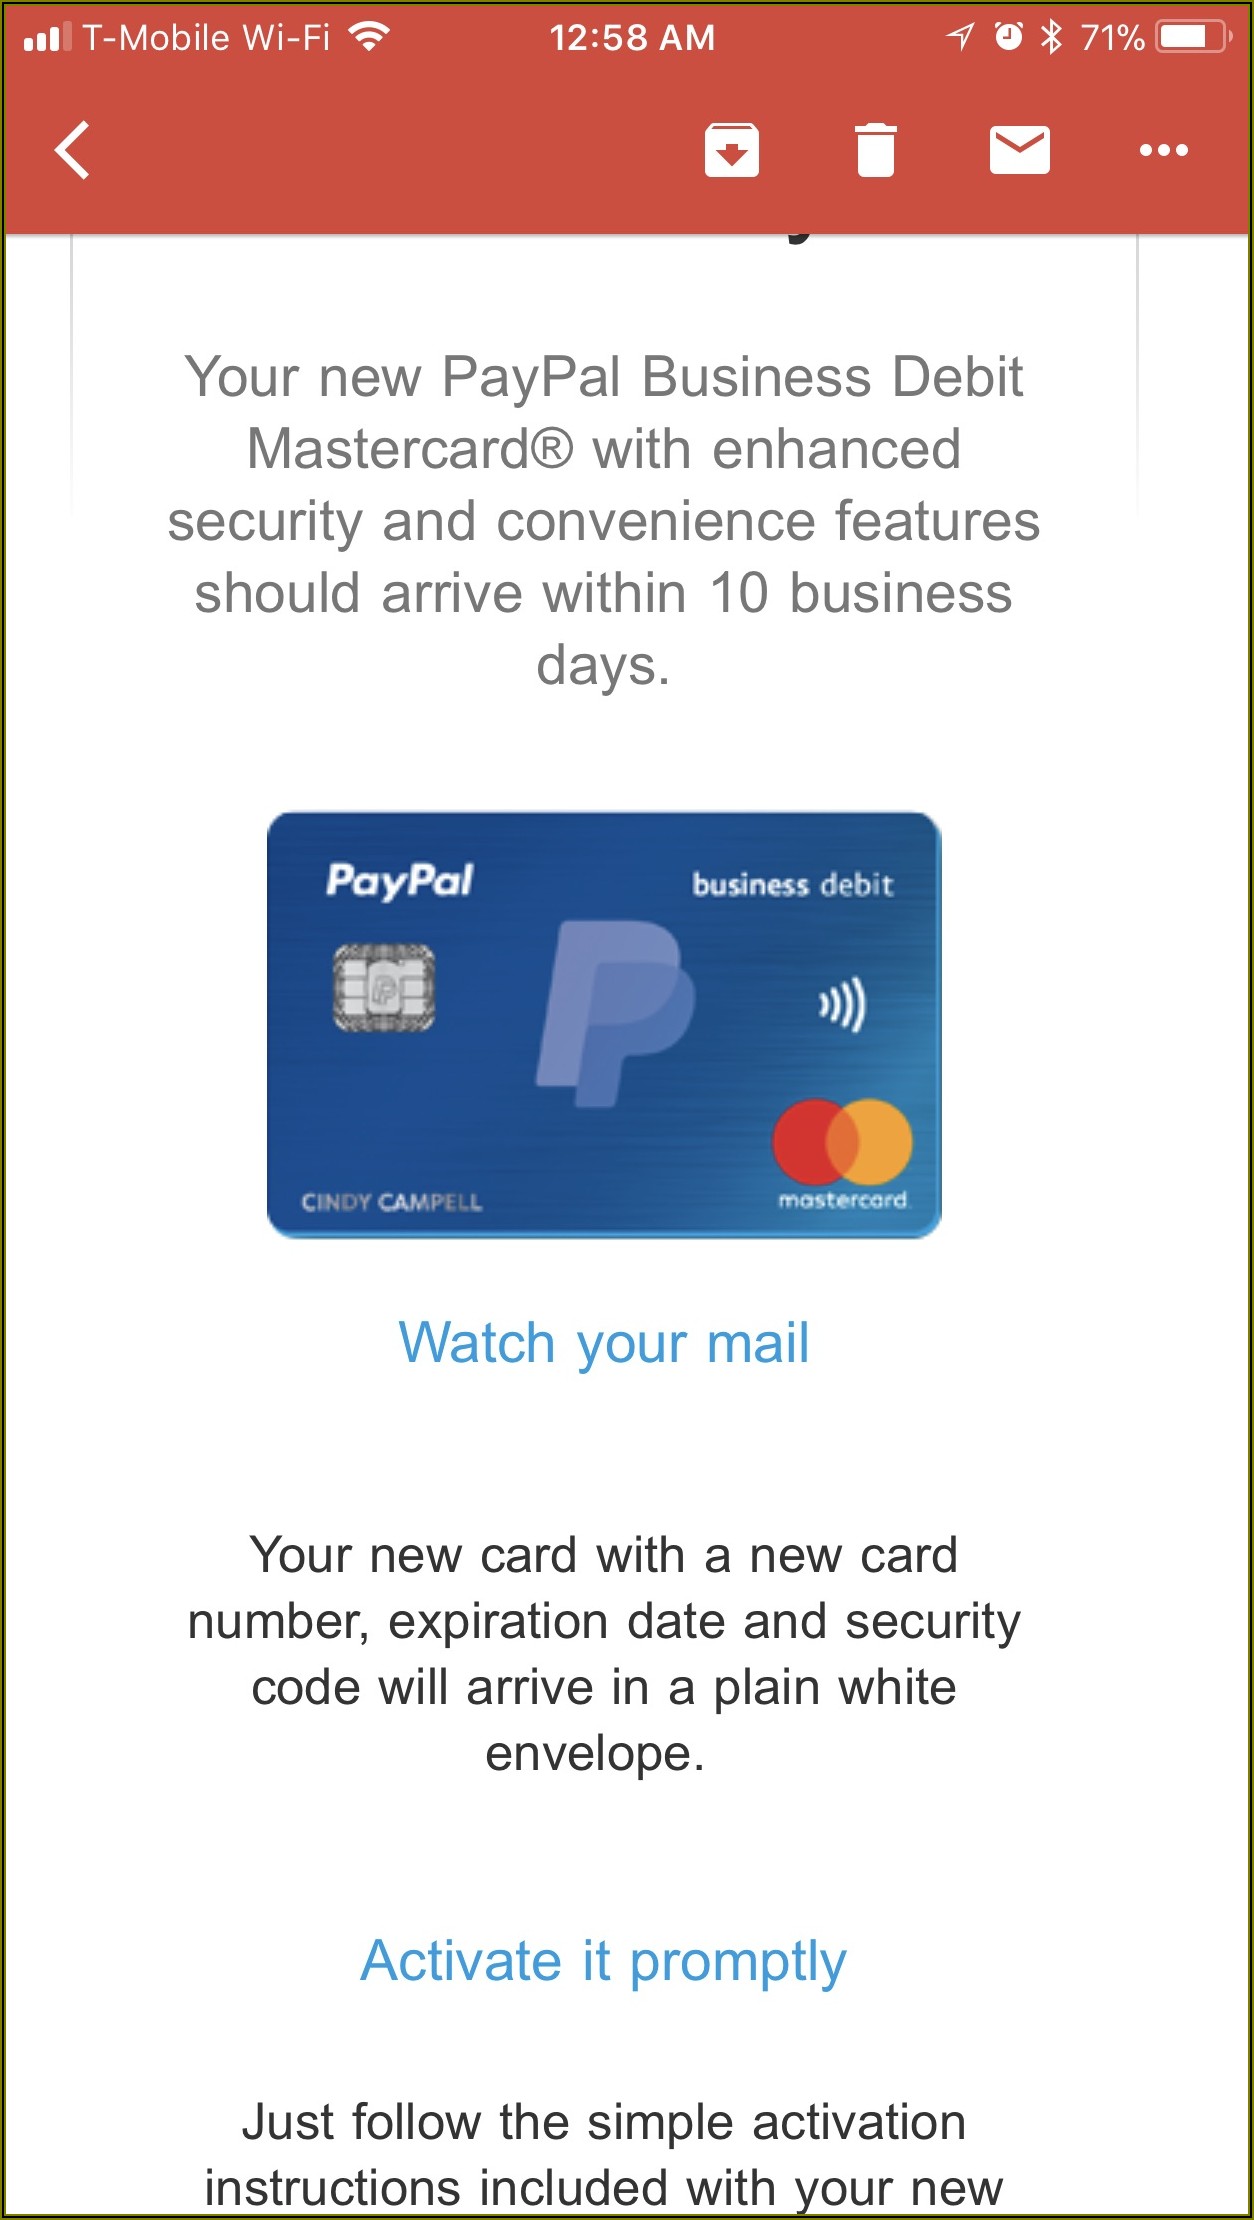 Activate Paypal Business Debit Card